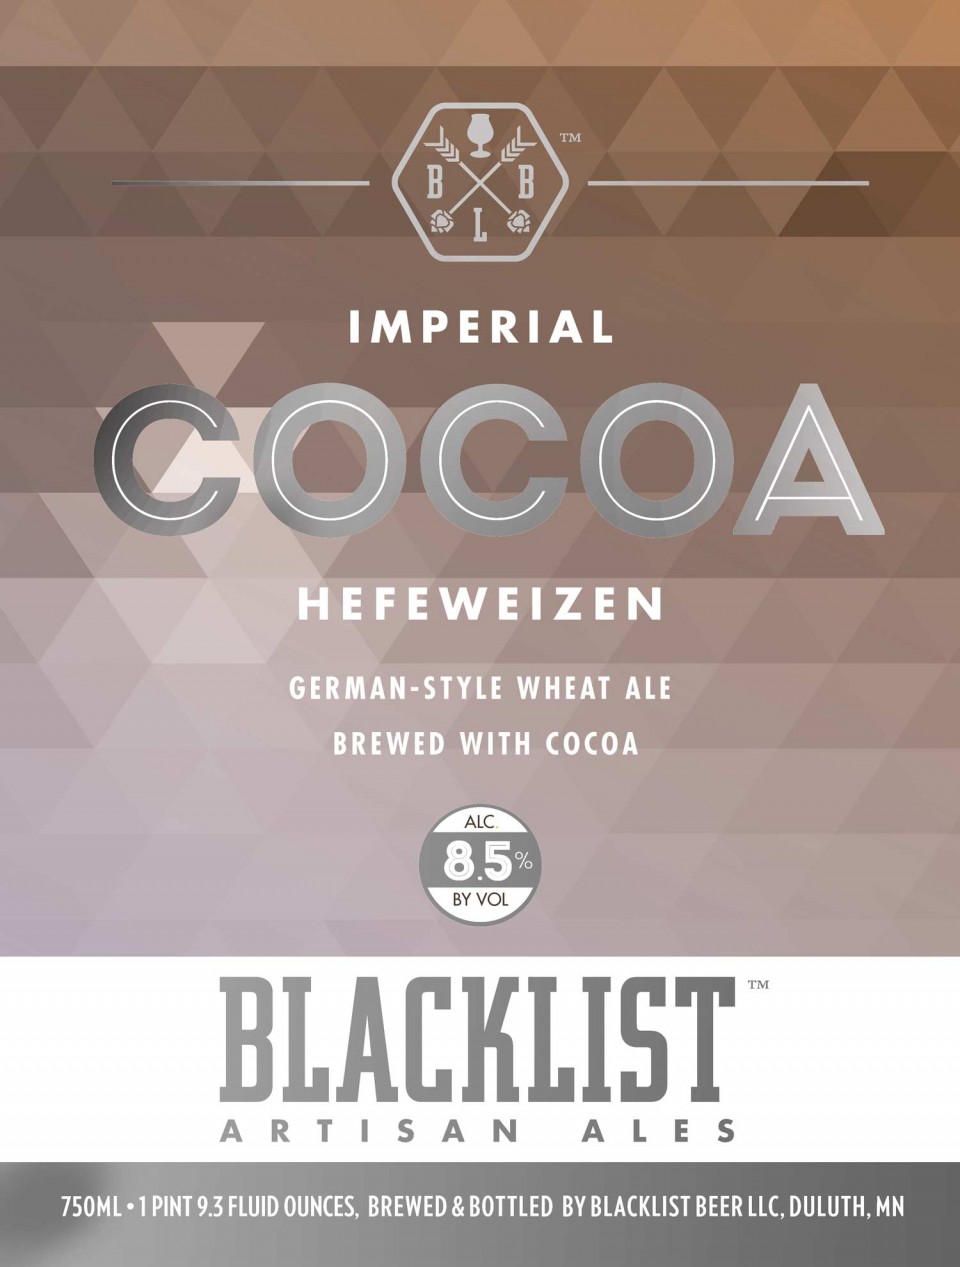 Blacklist Artisan Ales Imperial Cocoa Hefeweizen